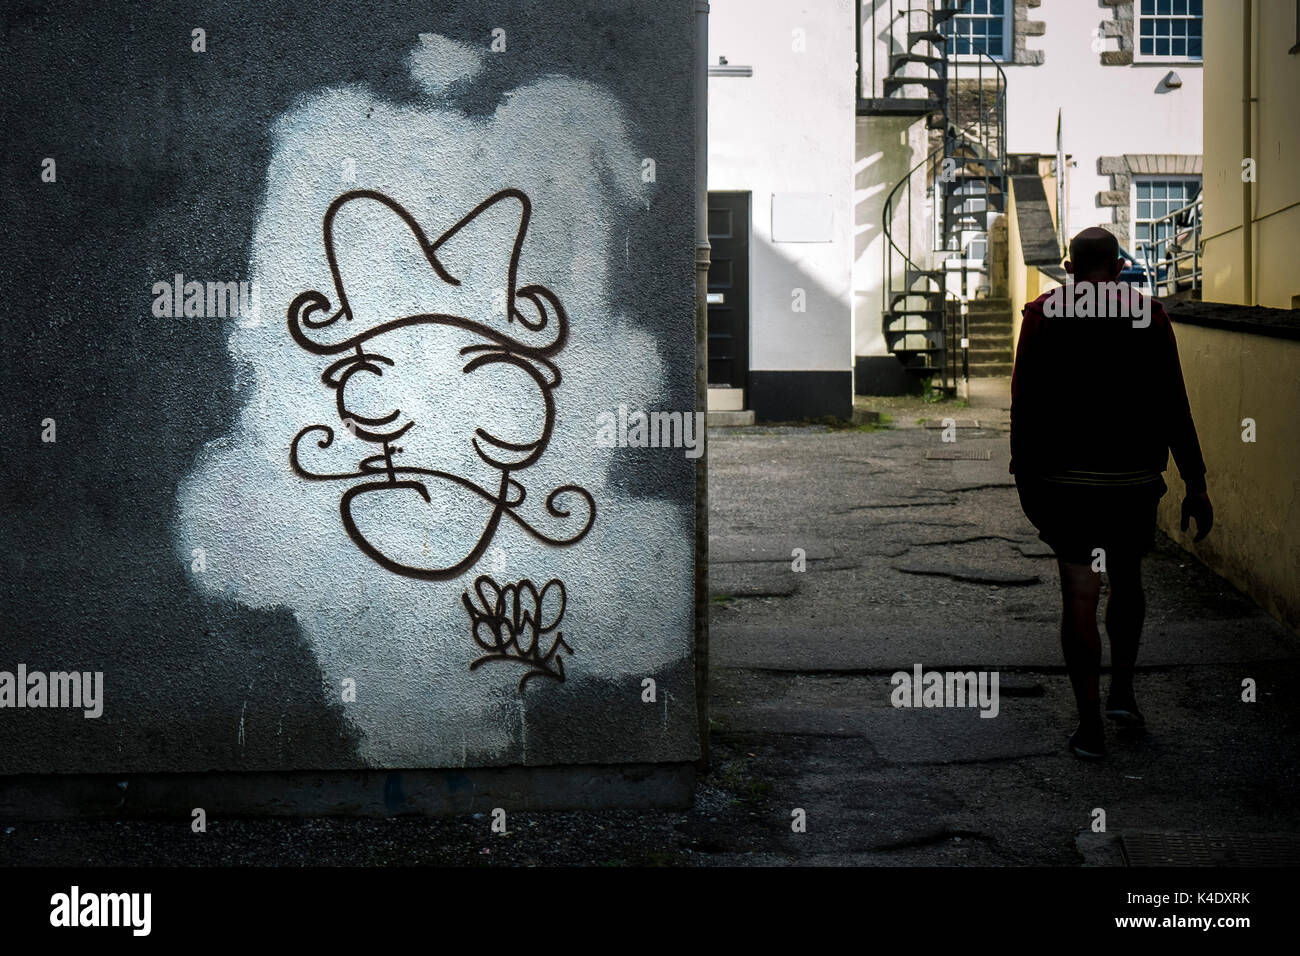 Graffiti - A figure walking past graffiti sprayed on a wall in Truro City centre in Cornwall. Stock Photo